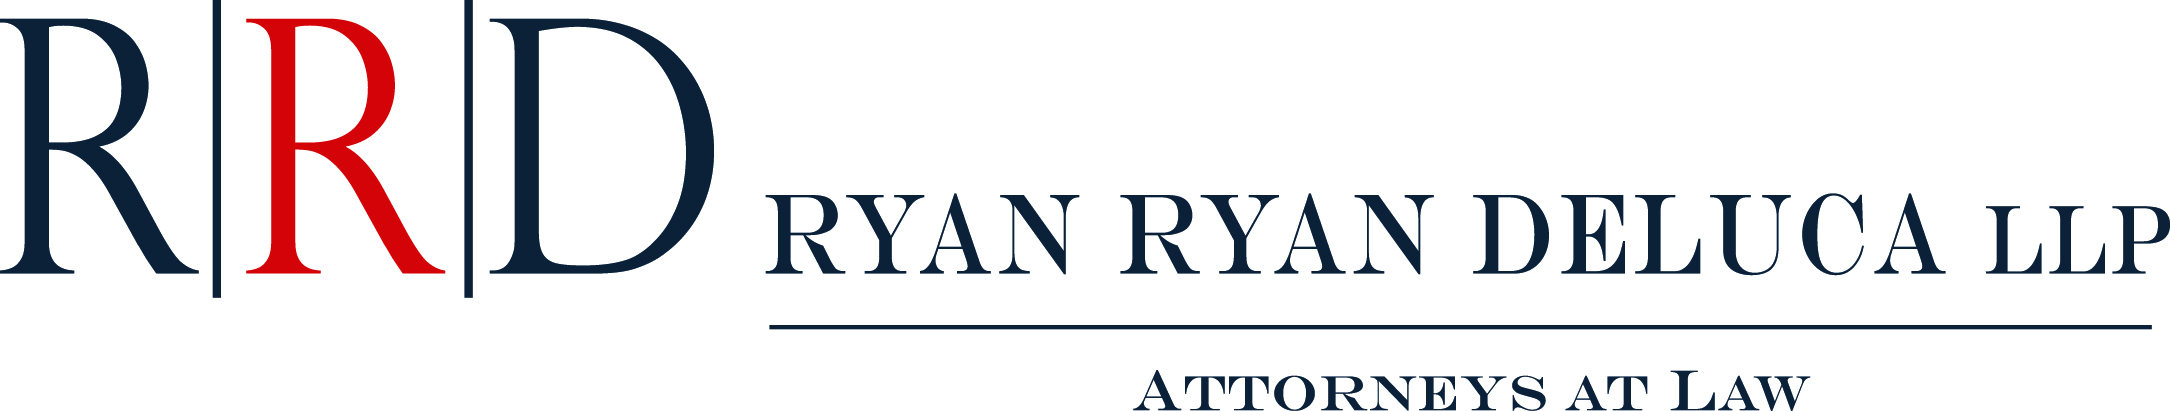 Ryan Ryan & Deluca Law